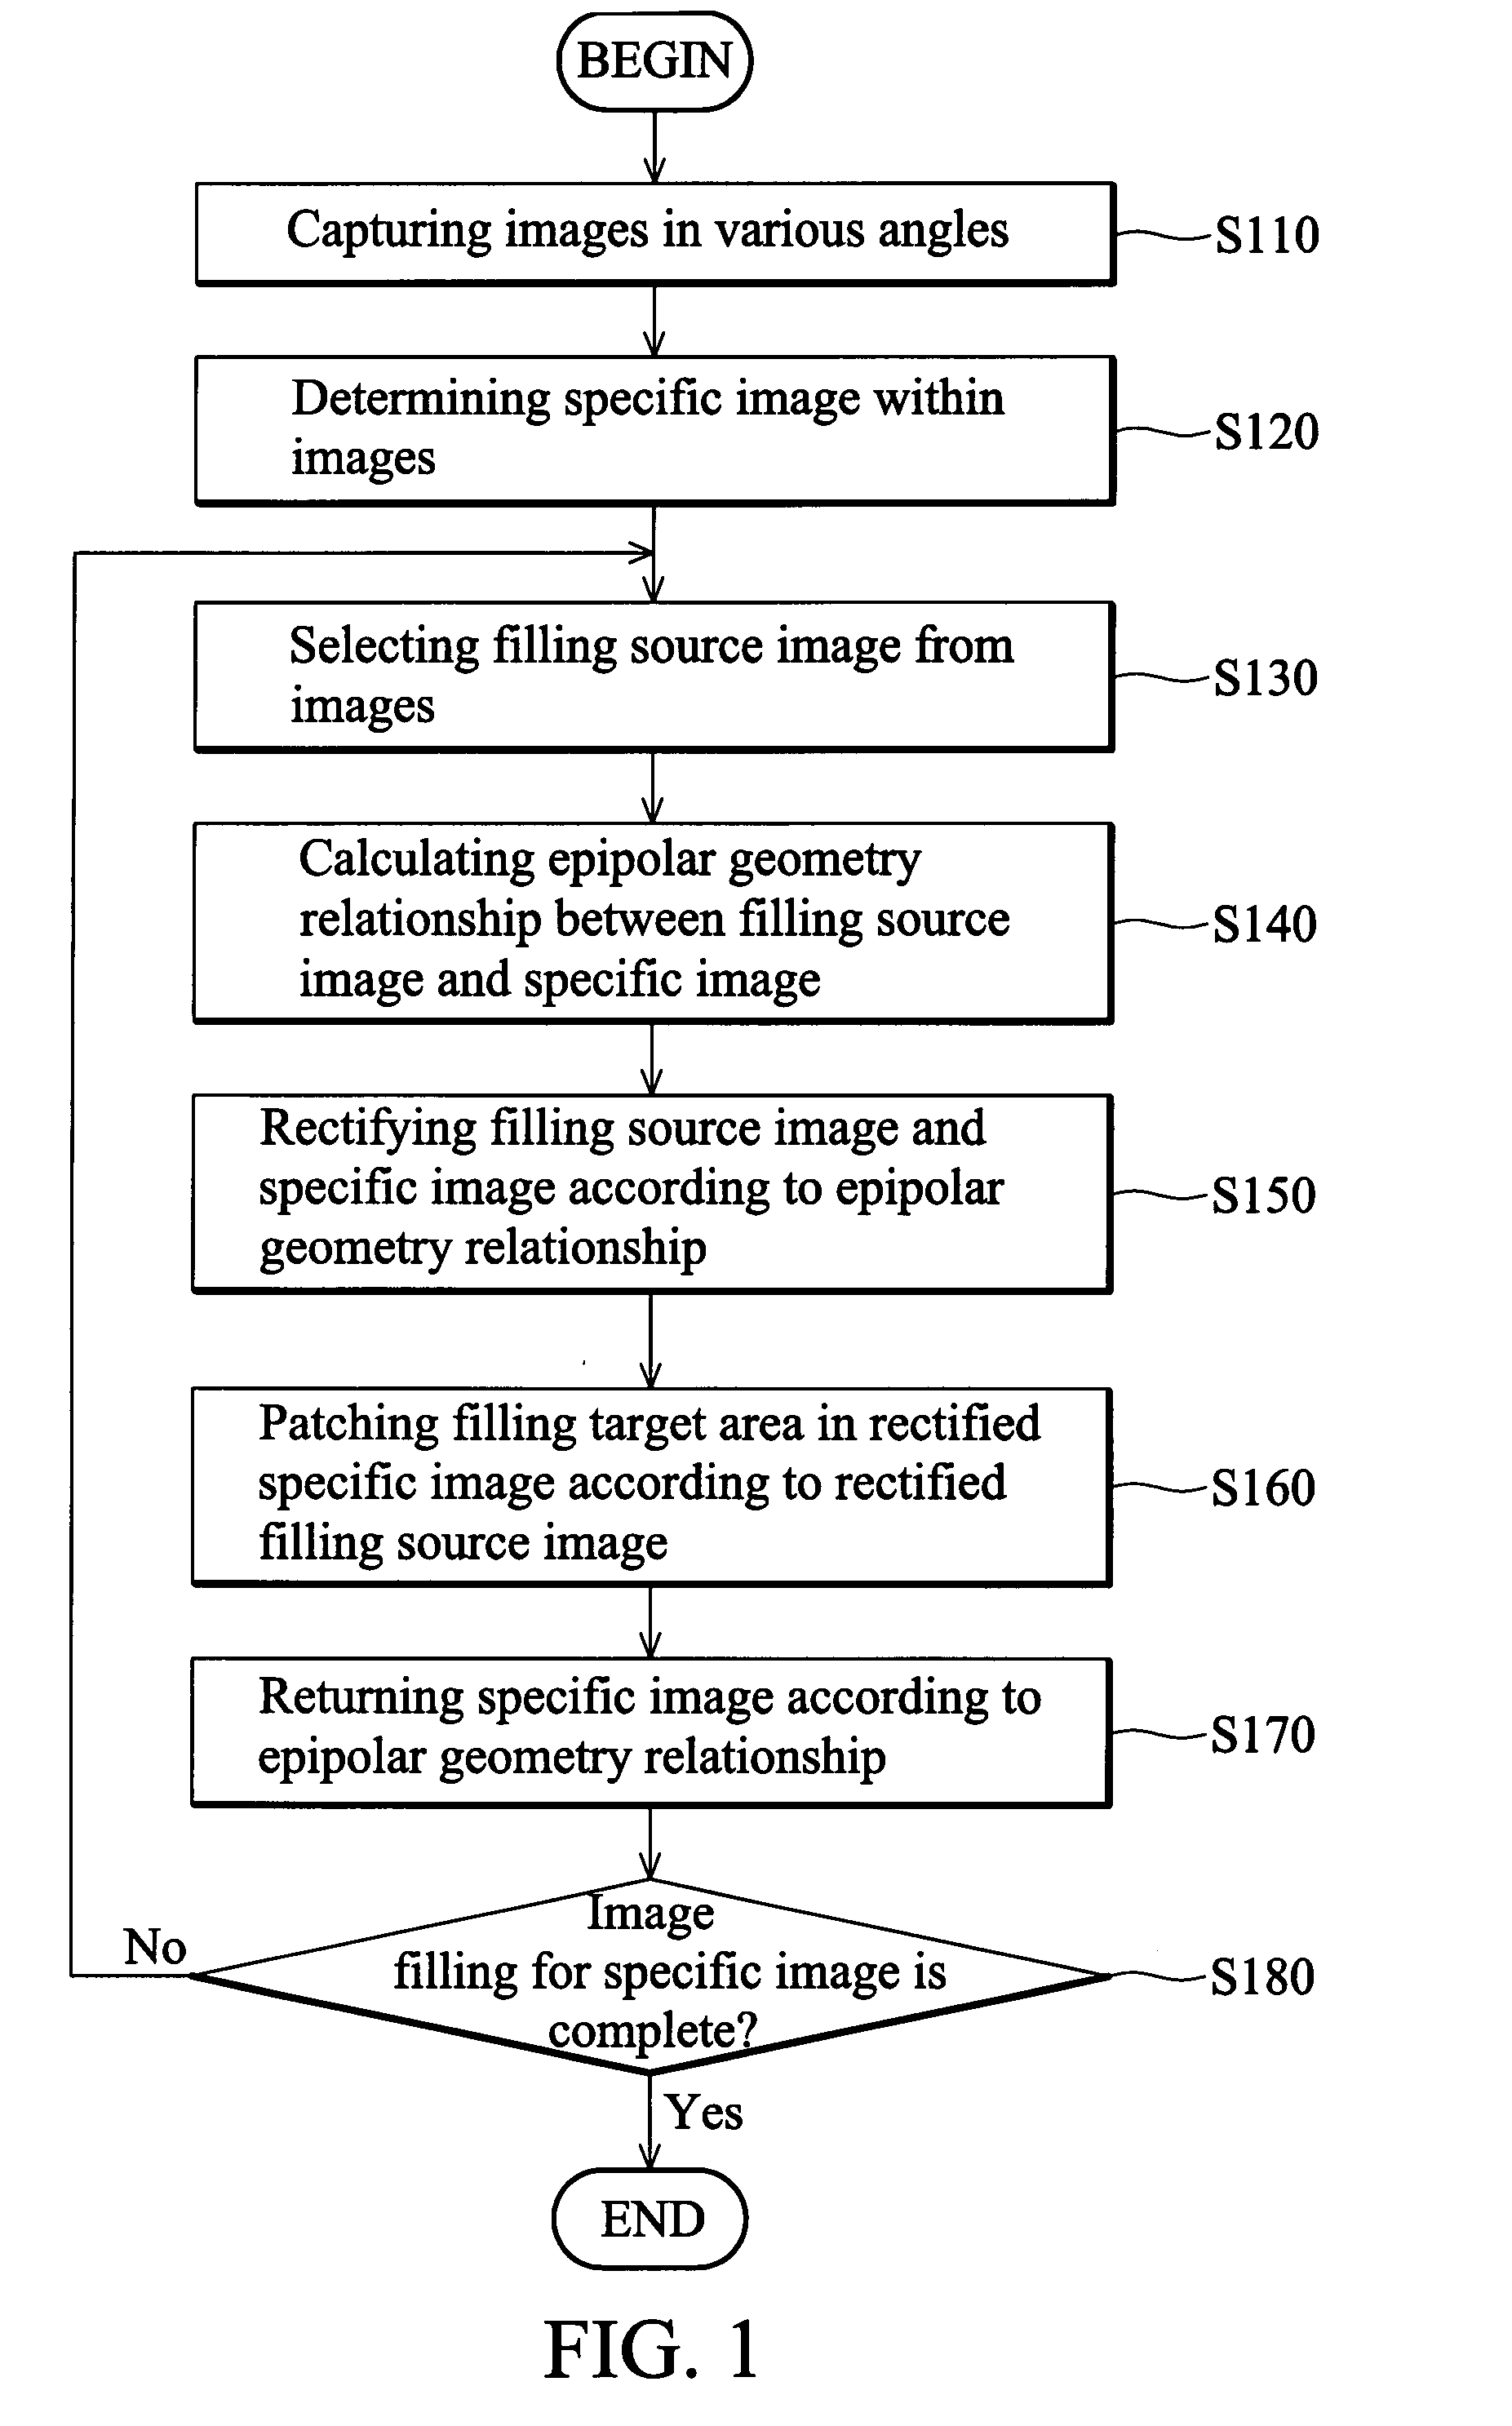 Image filling methods